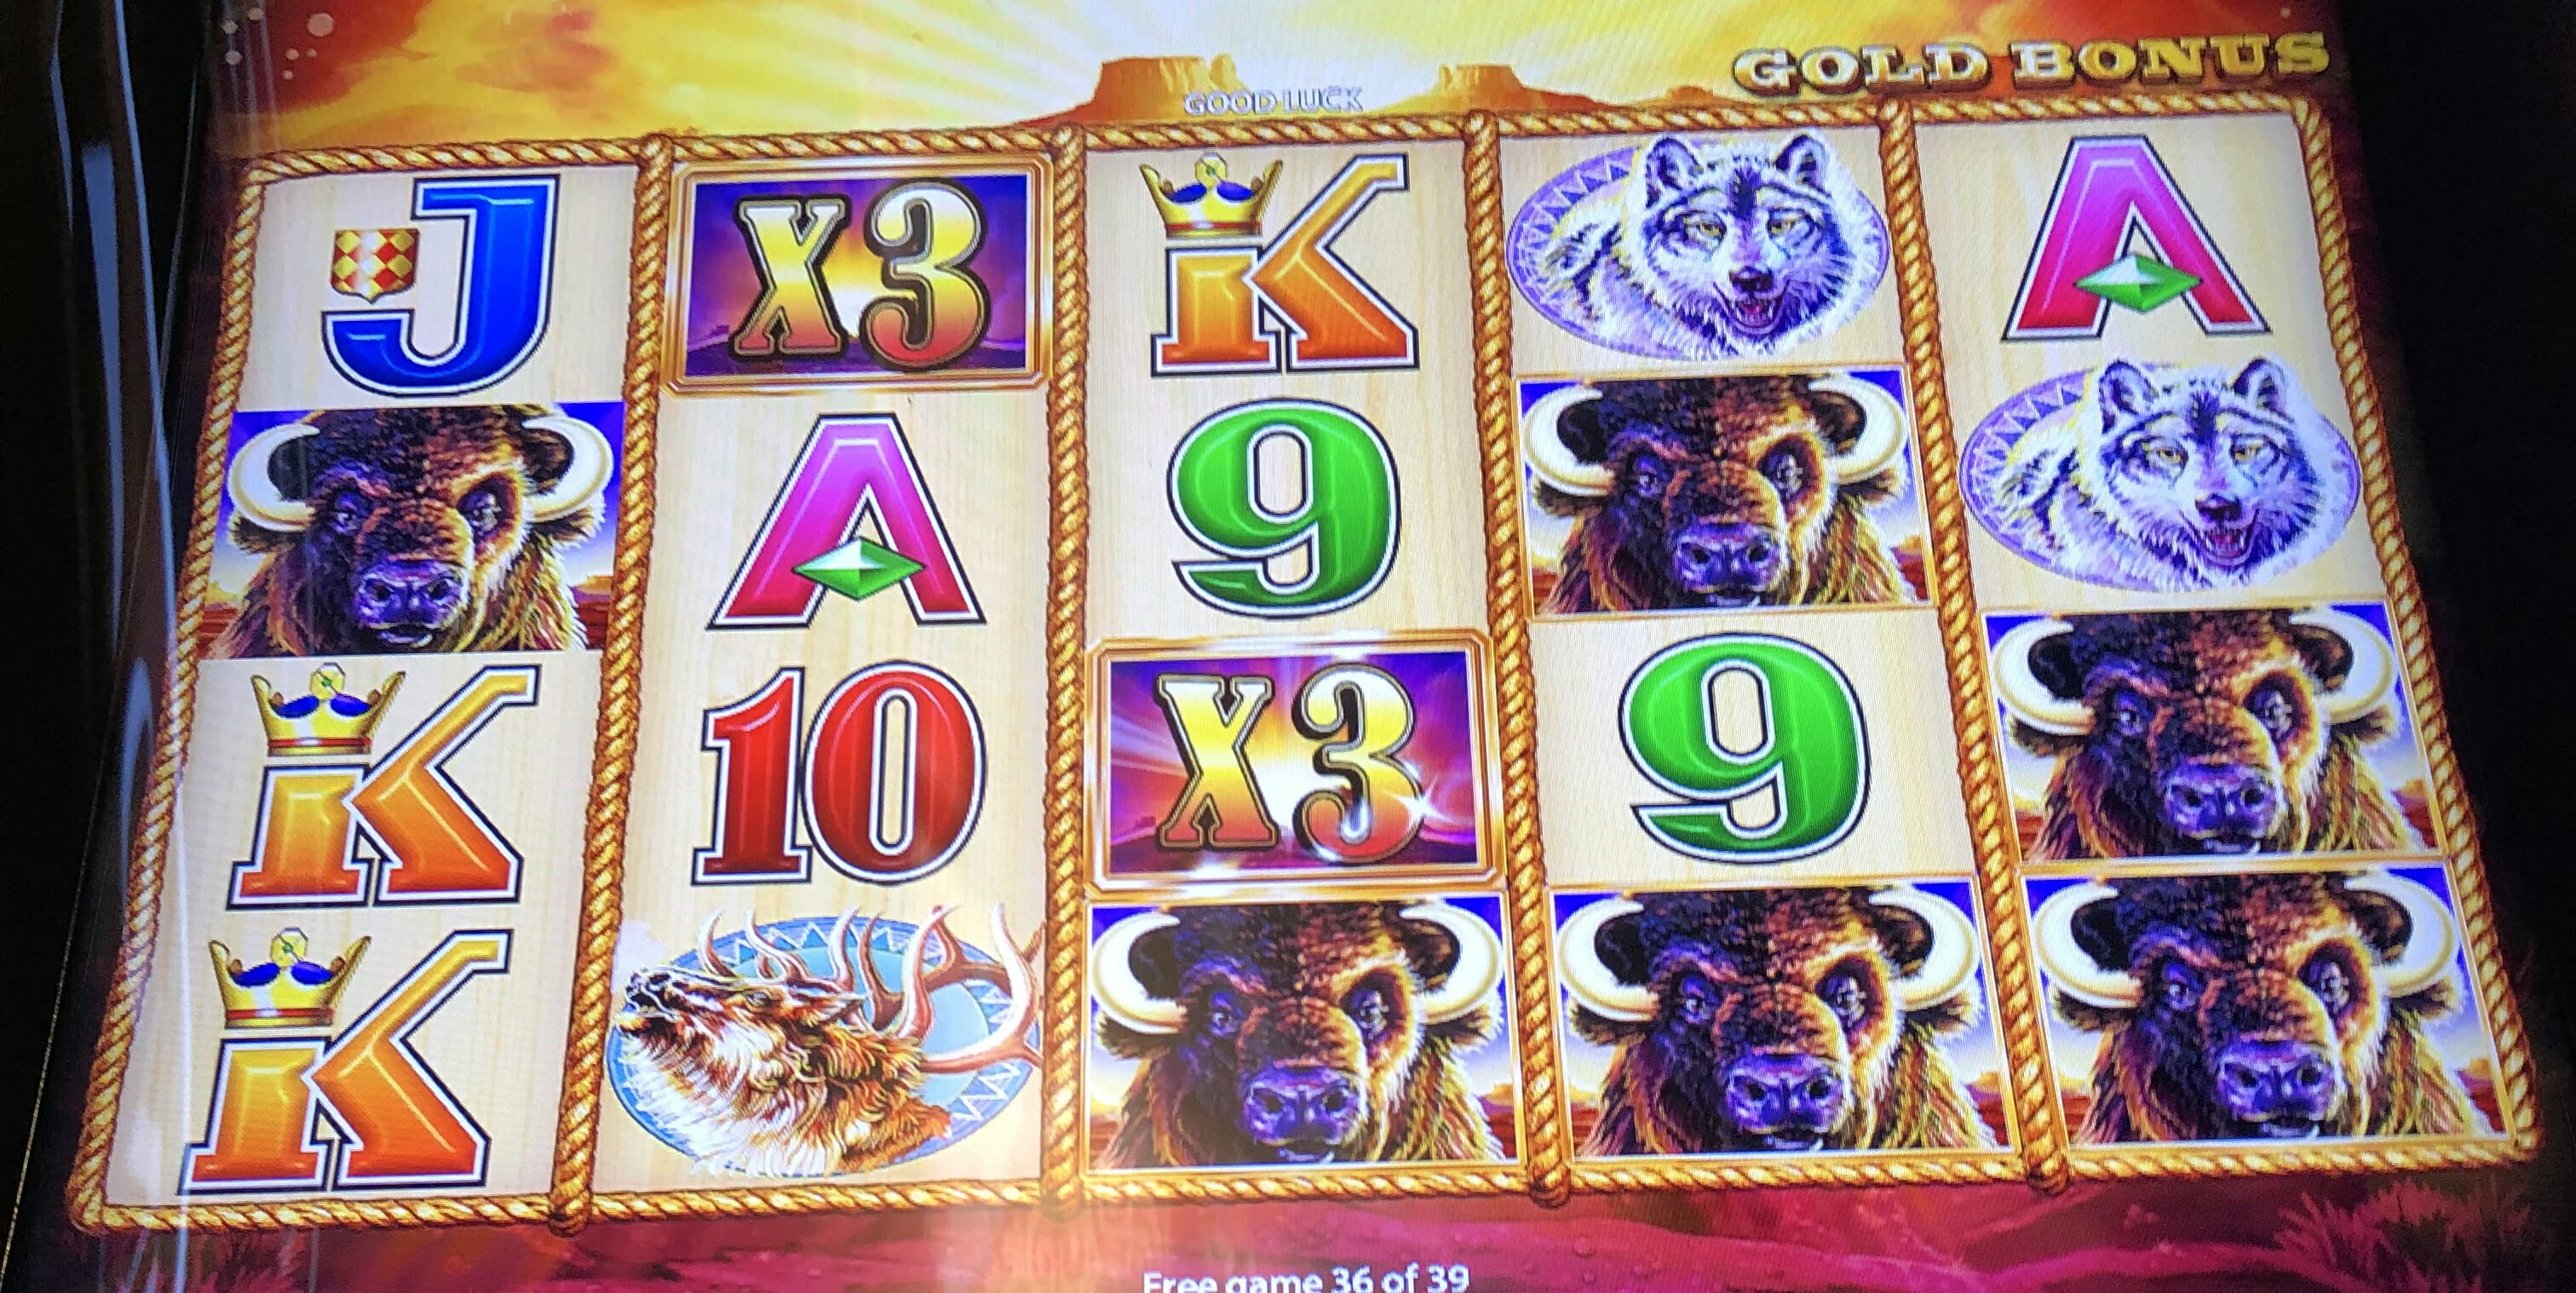 buffalo gold collection slot machine